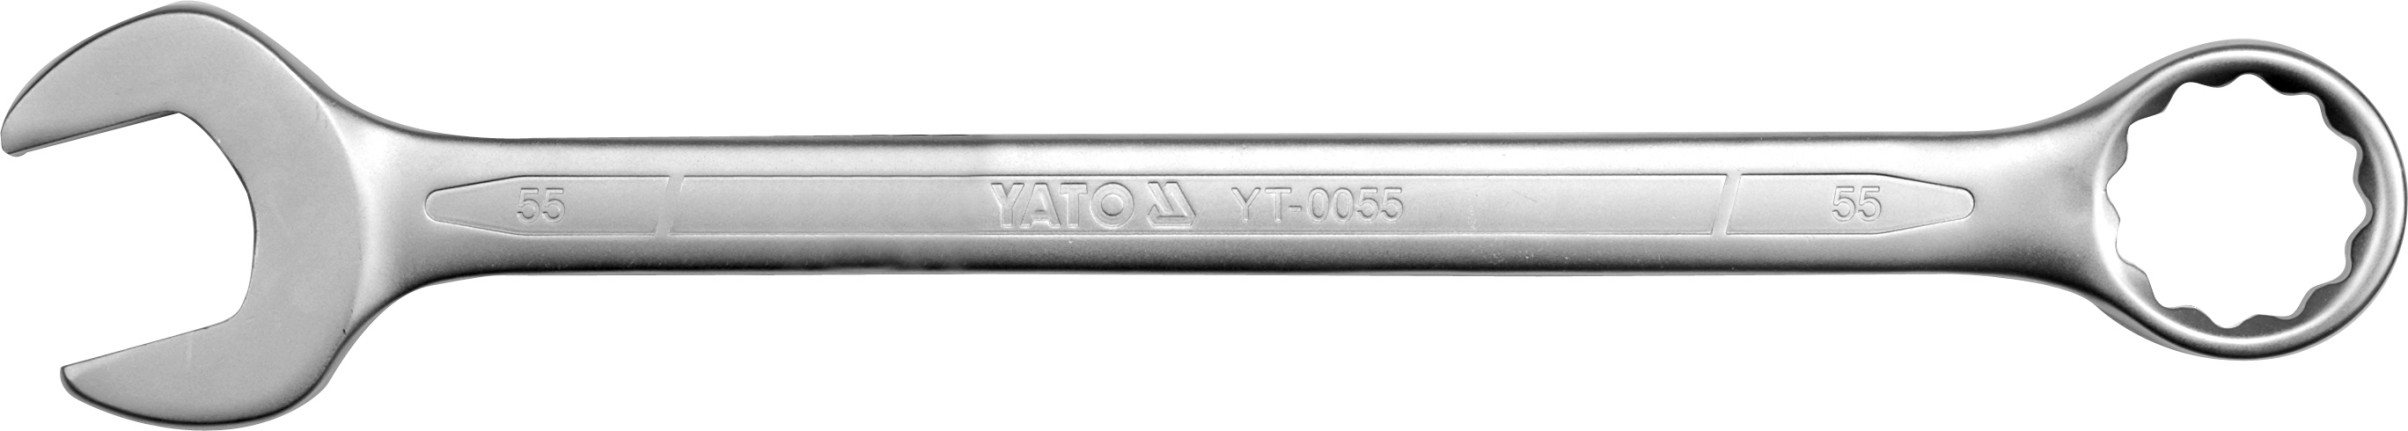 Yato csavarkulcs 55 mm, CrV6140